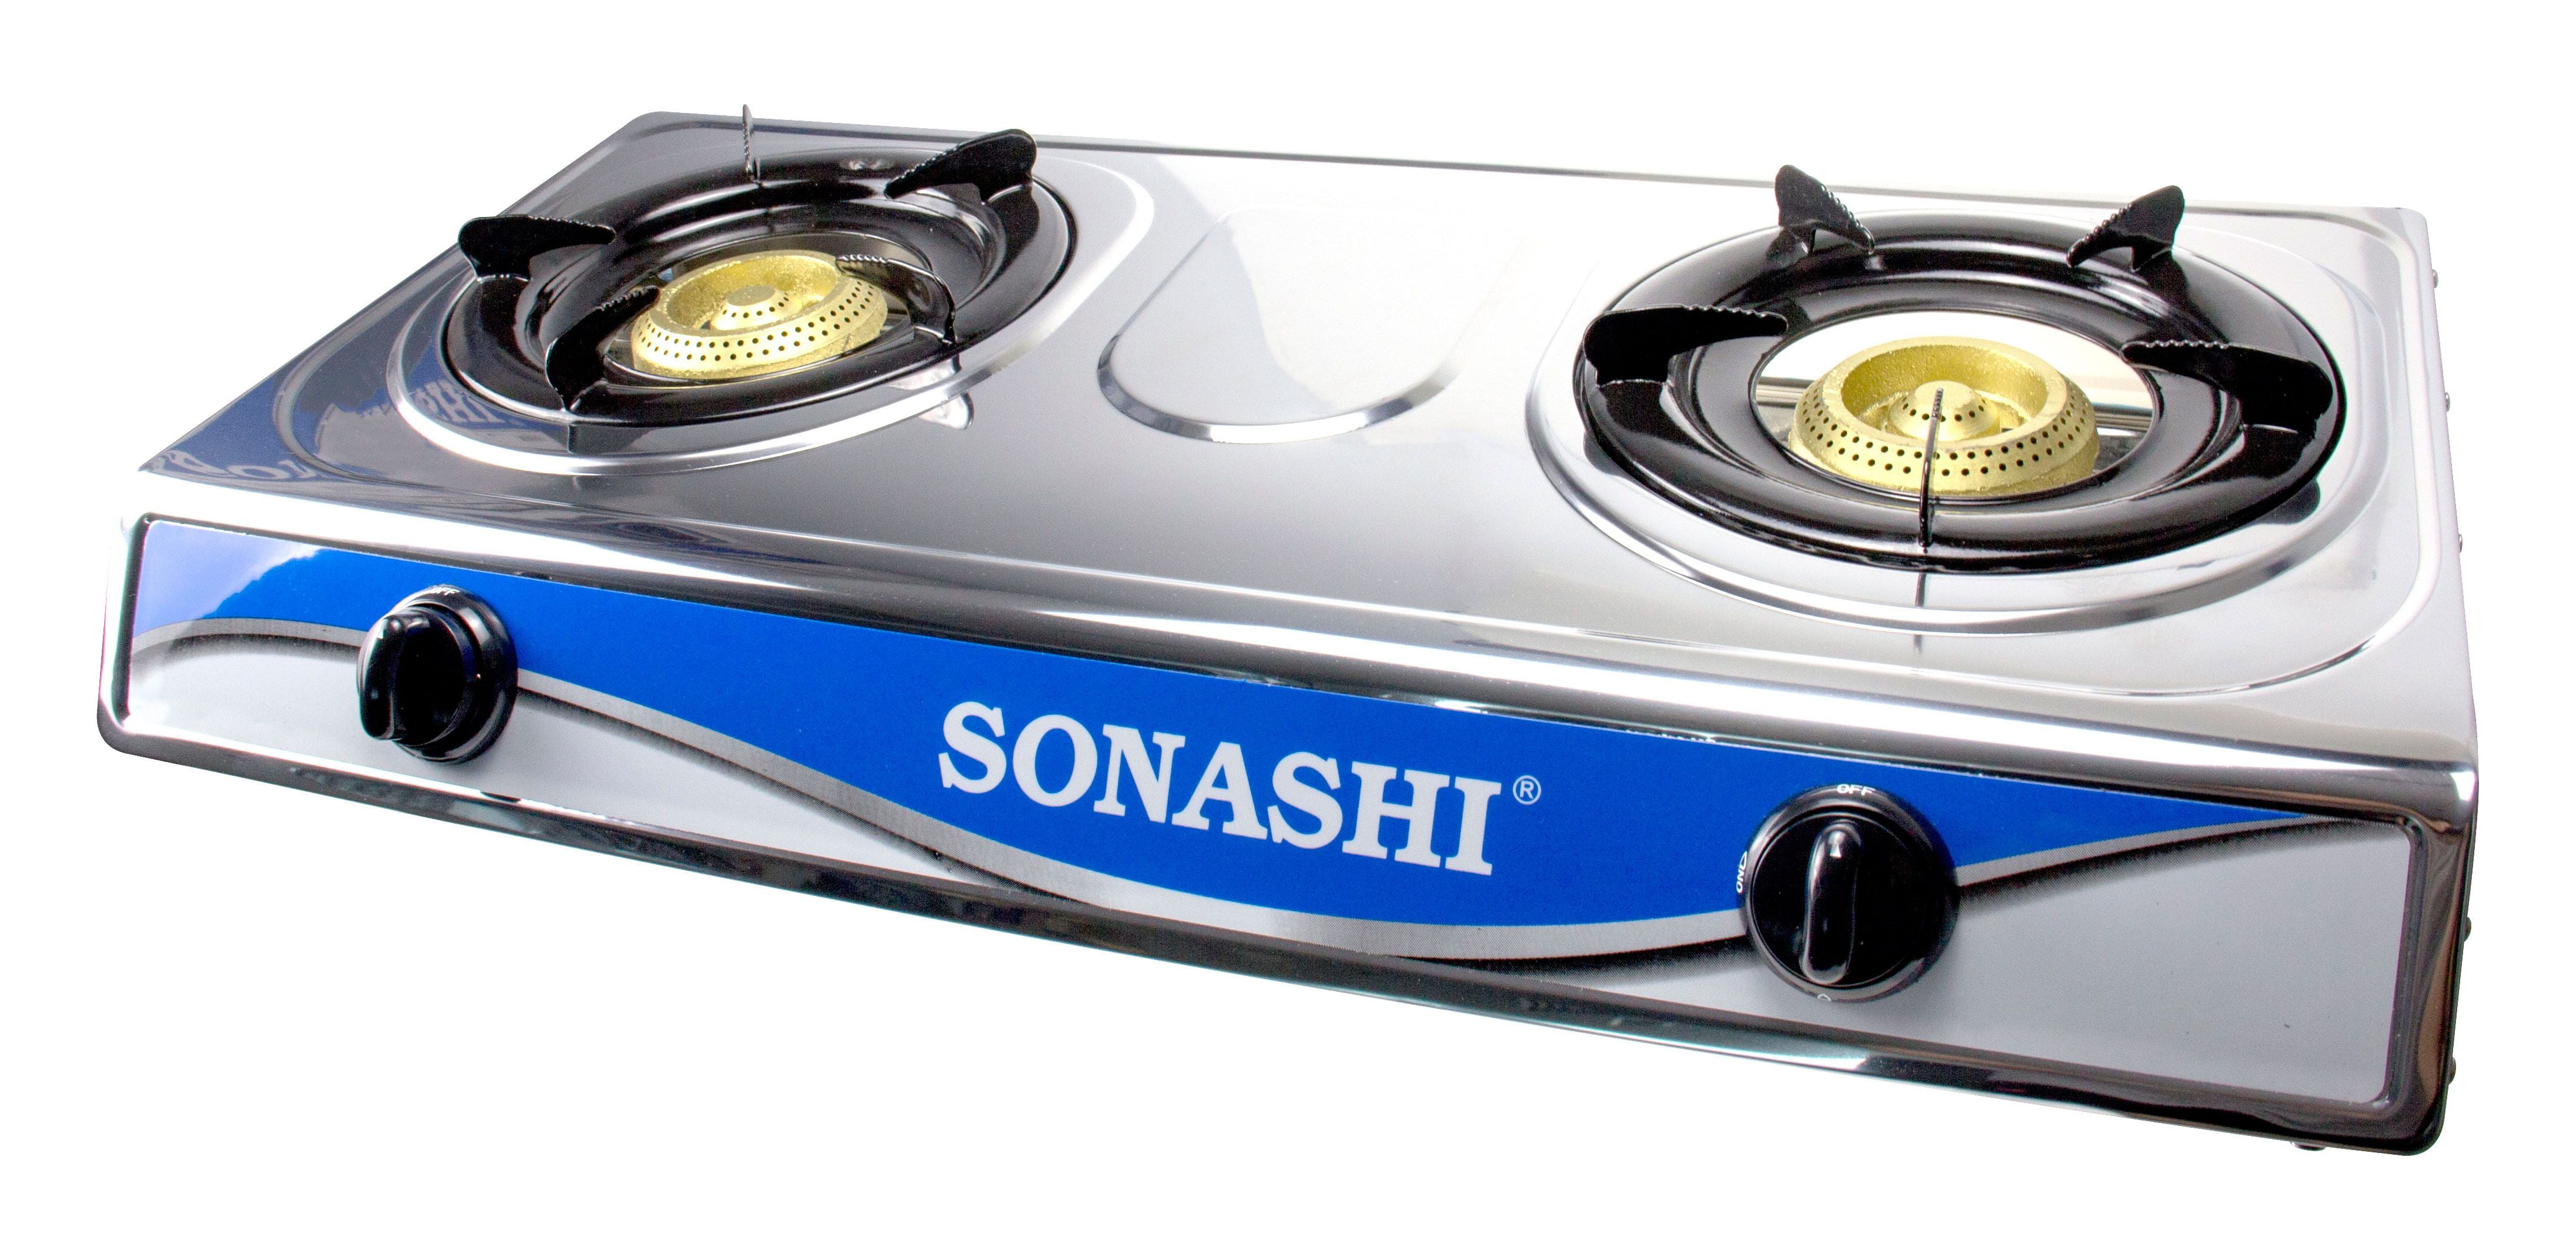 Sonashi Two Gas Burner